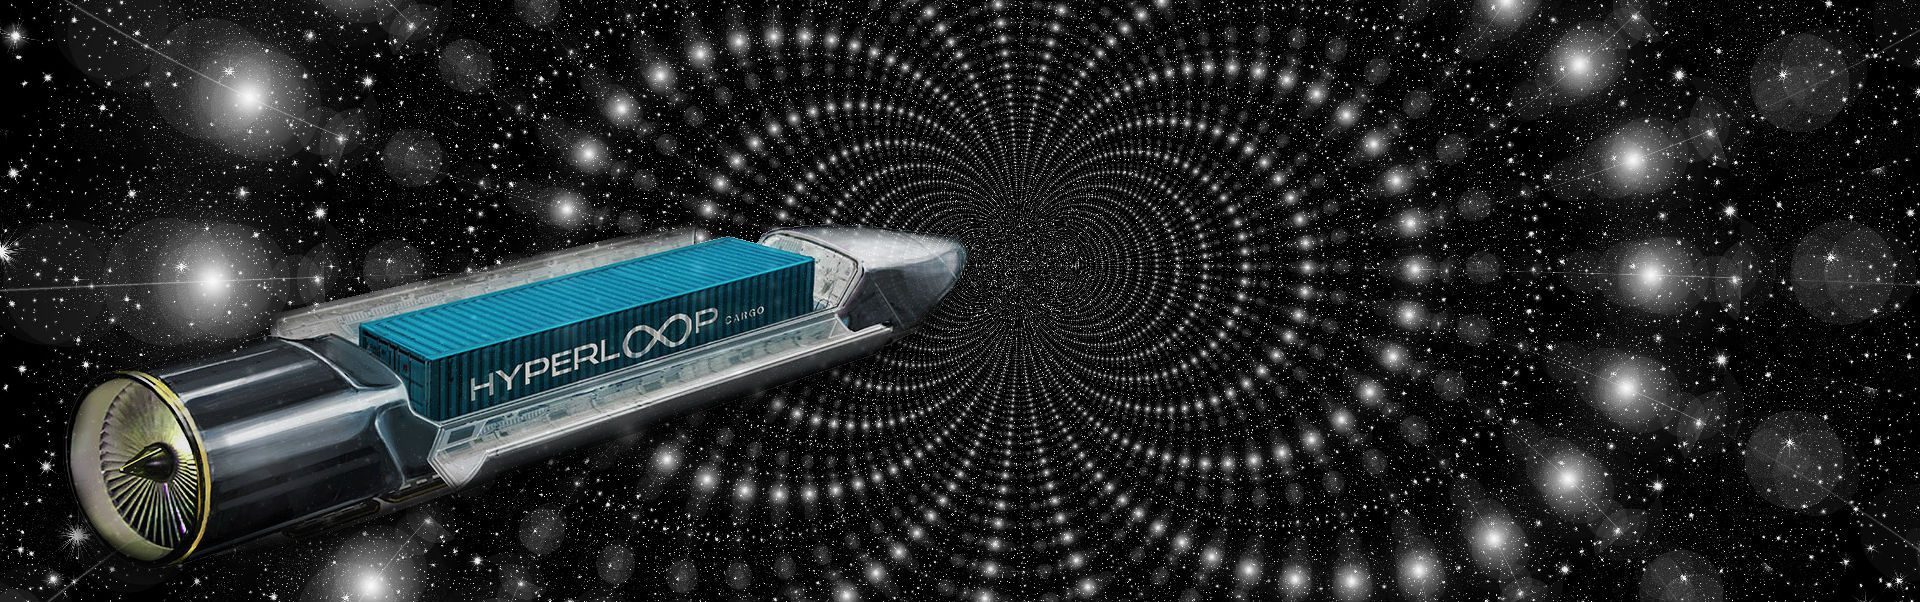 hyperloop, hyperloop one, transportation, innovation, new technology